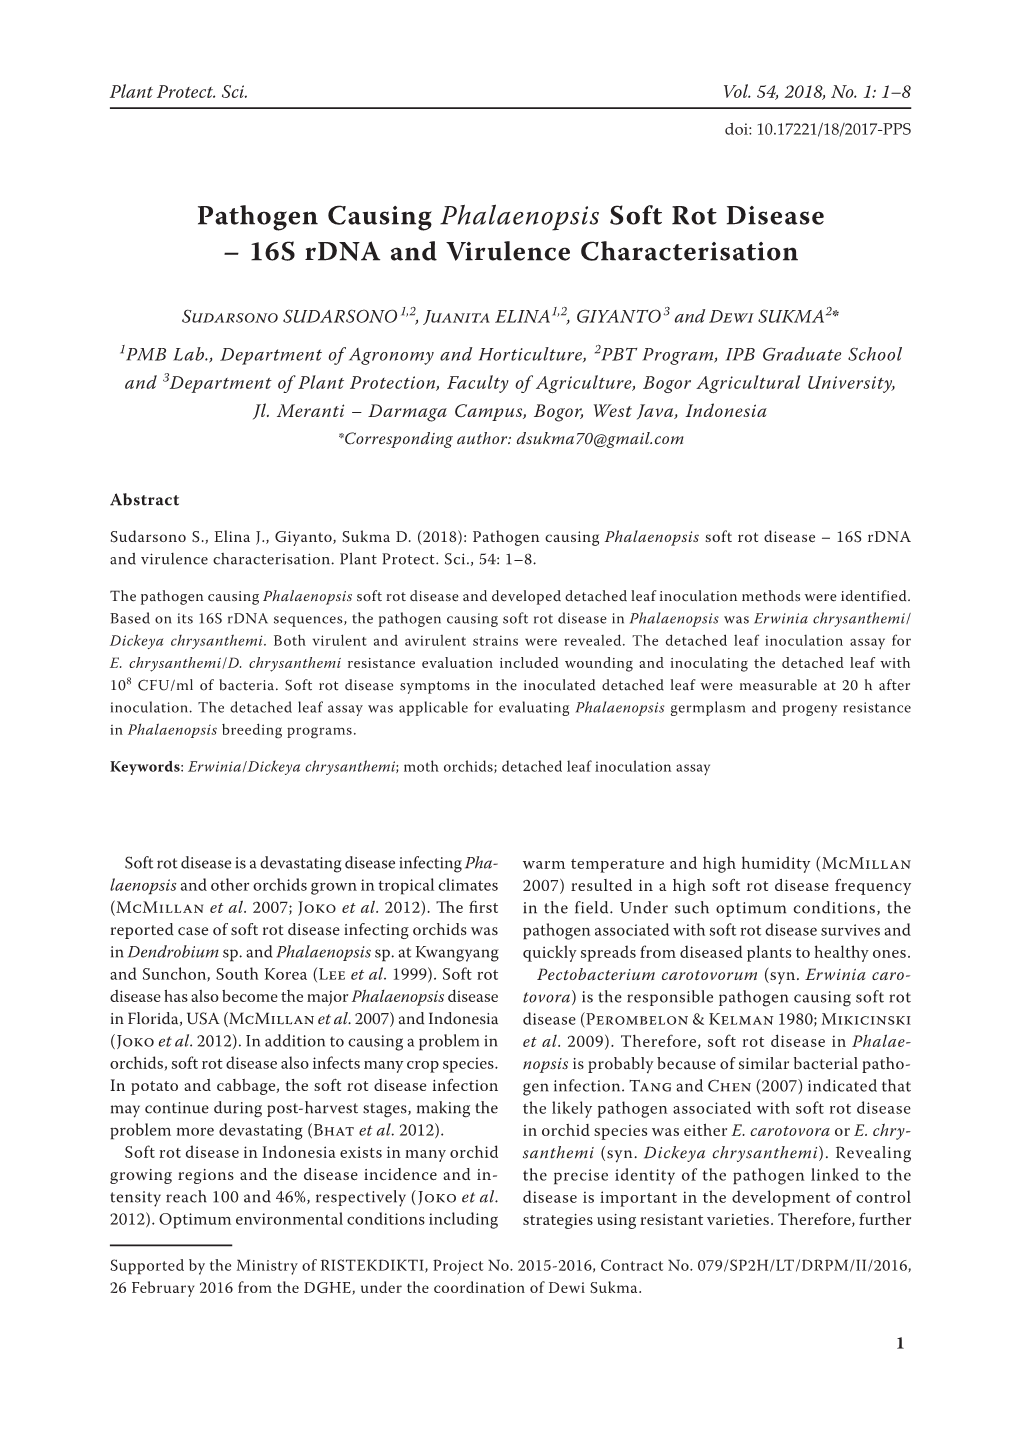 Pathogen Causing Phalaenopsis Soft Rot Disease – 16S Rdna and Virulence Characterisation